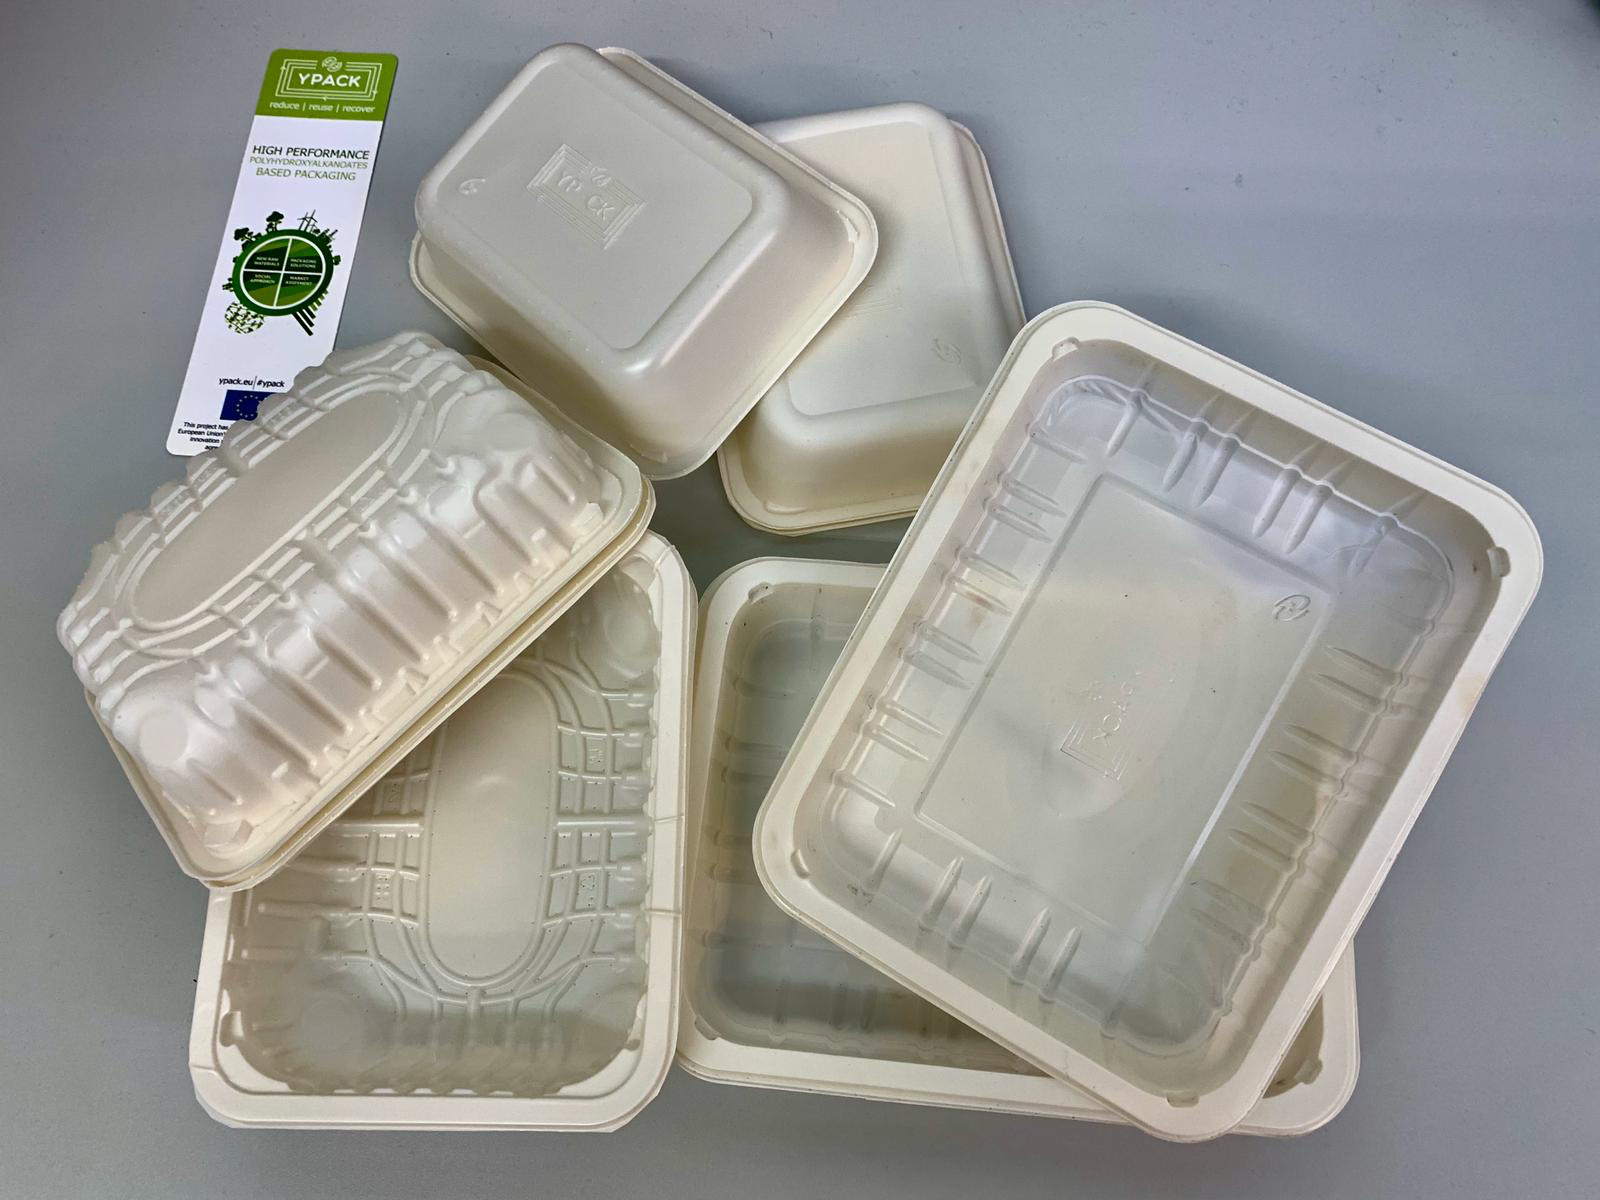 YPACK develops innovative biodegradable food packaging extending